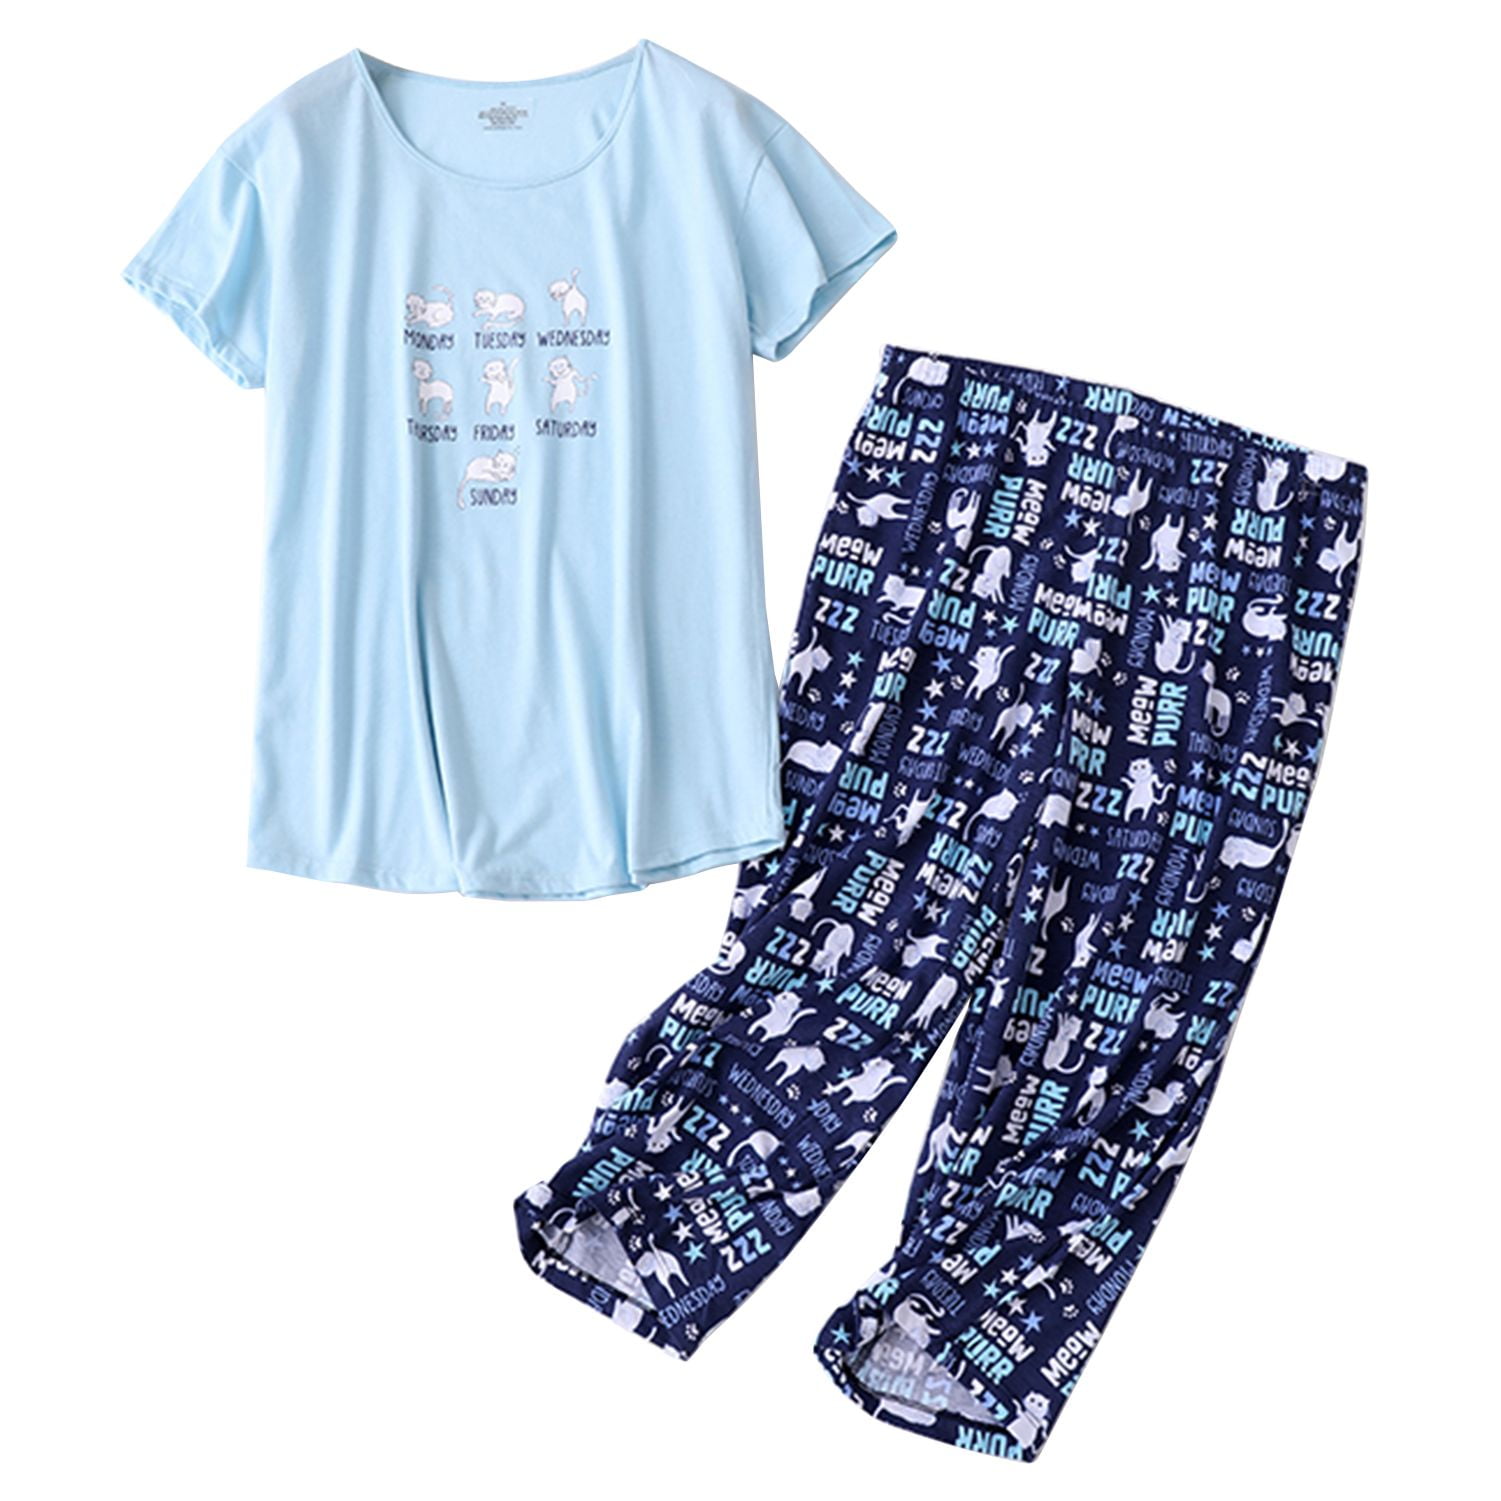 Homgro Women's Cotton Pajama Set Soft 2 Piece Cute Patterned Pjs Short ...